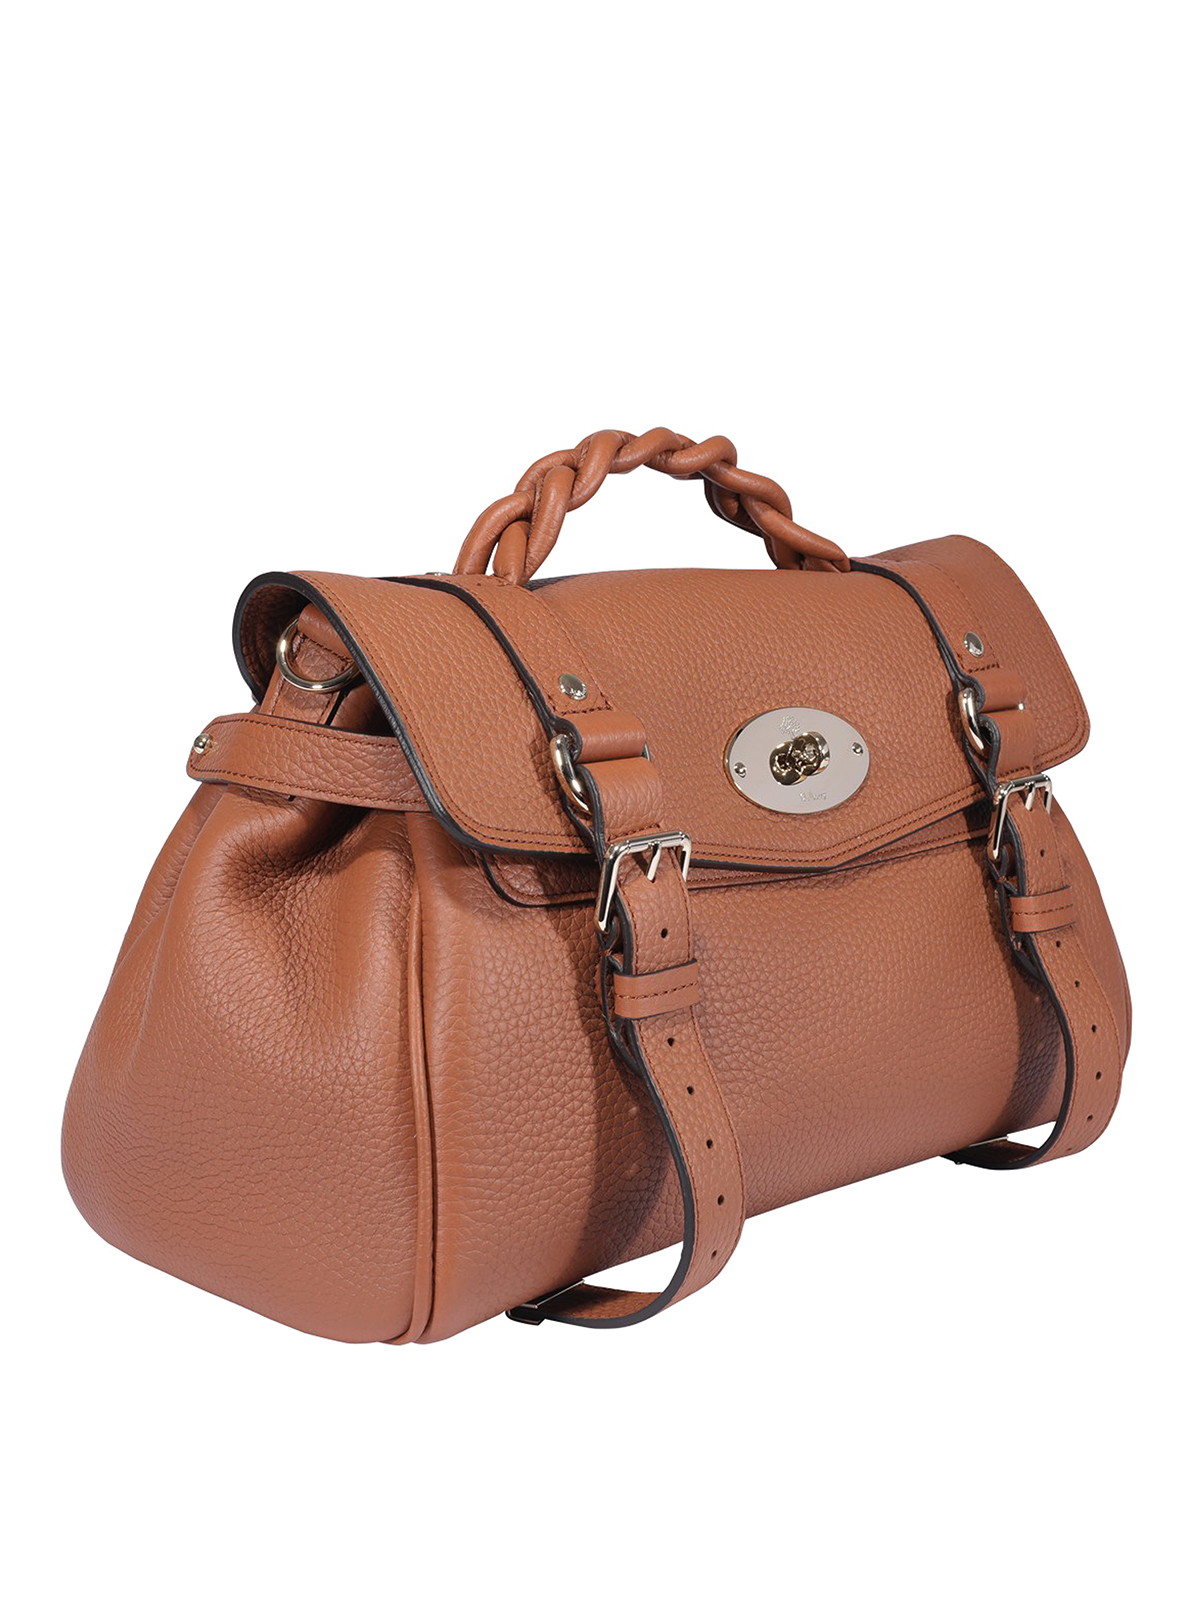 Brown Mulberry Leather Shoulder Bag